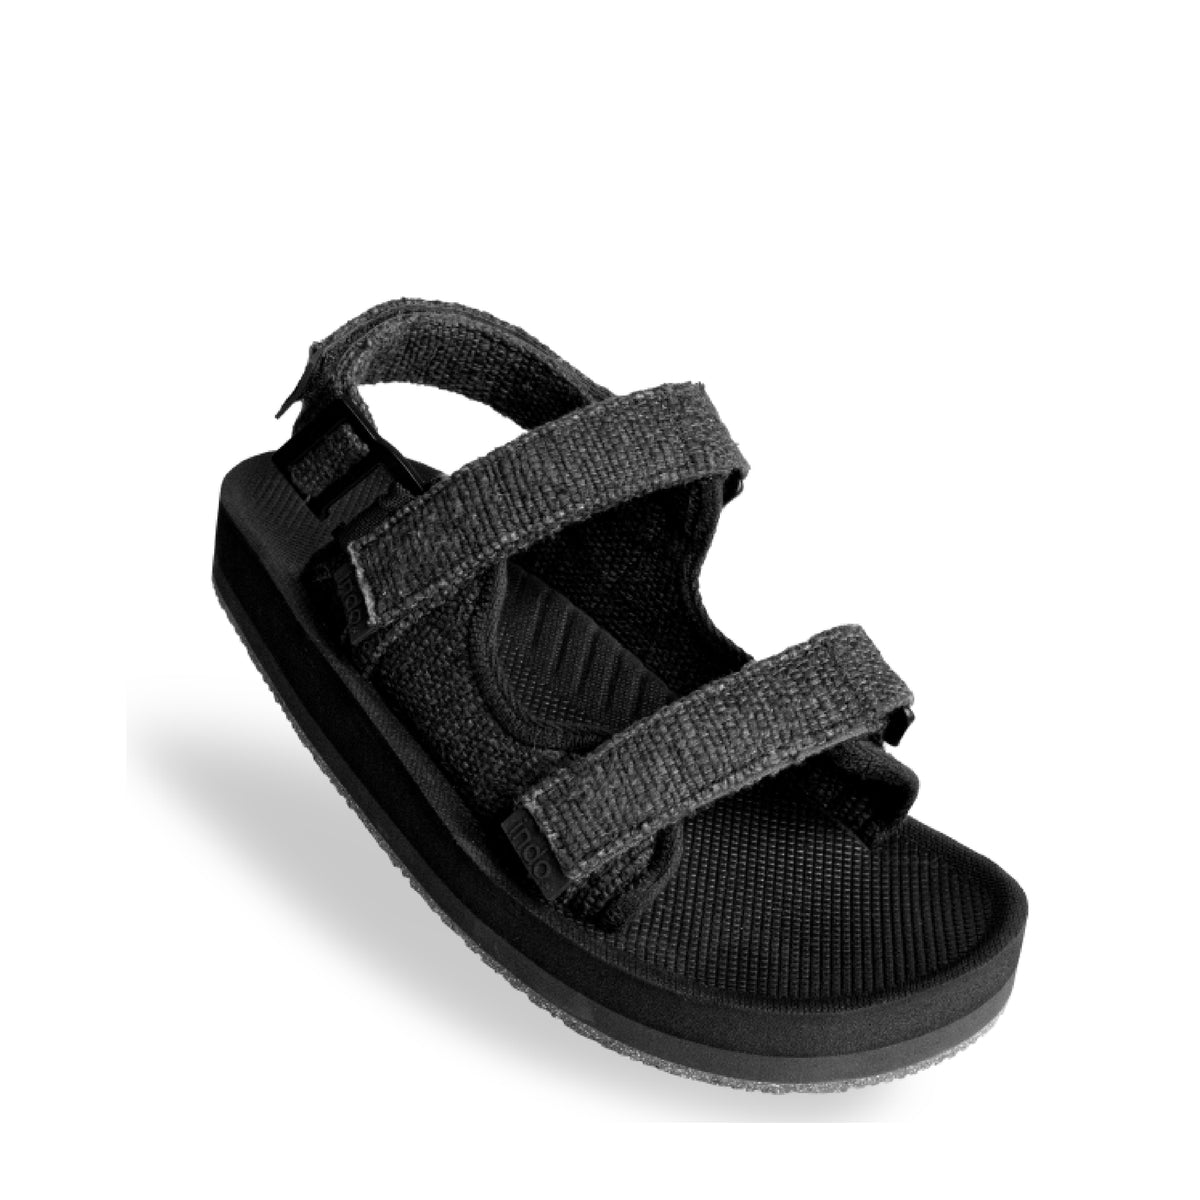 Men’s Sandals Adventurer pable - Black/Ketapang